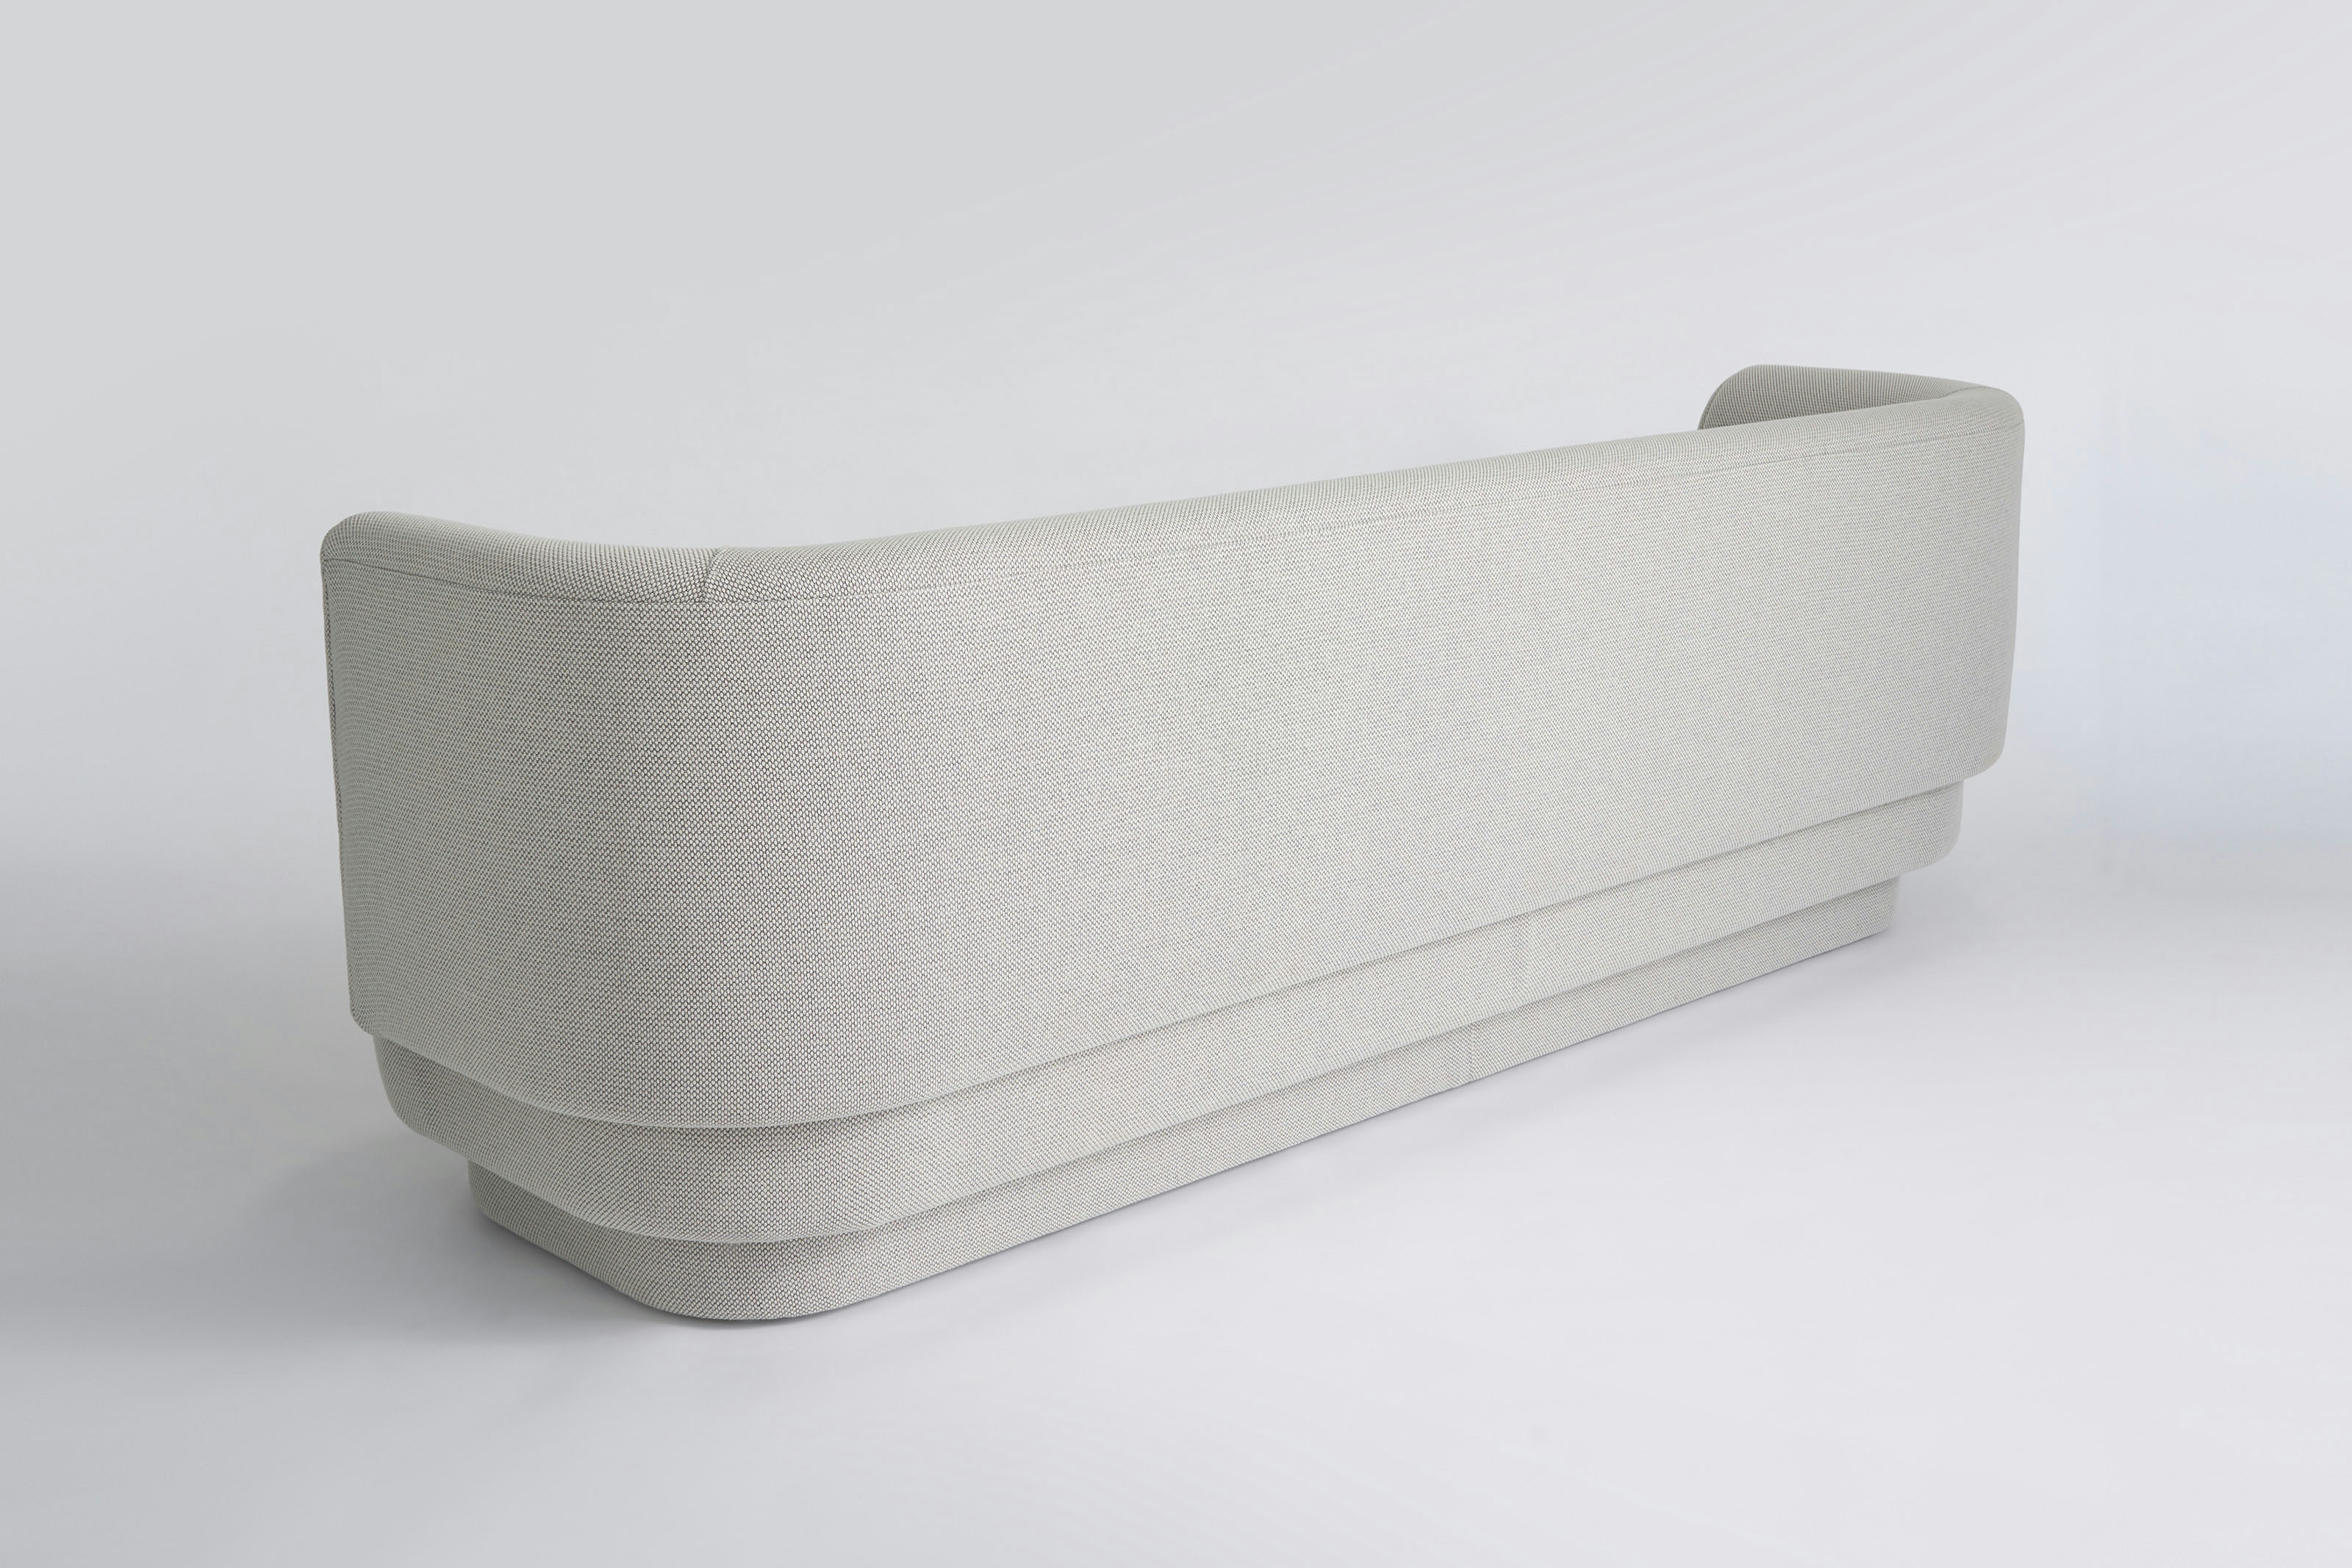 Phase Design Capper Sofa 4 Web